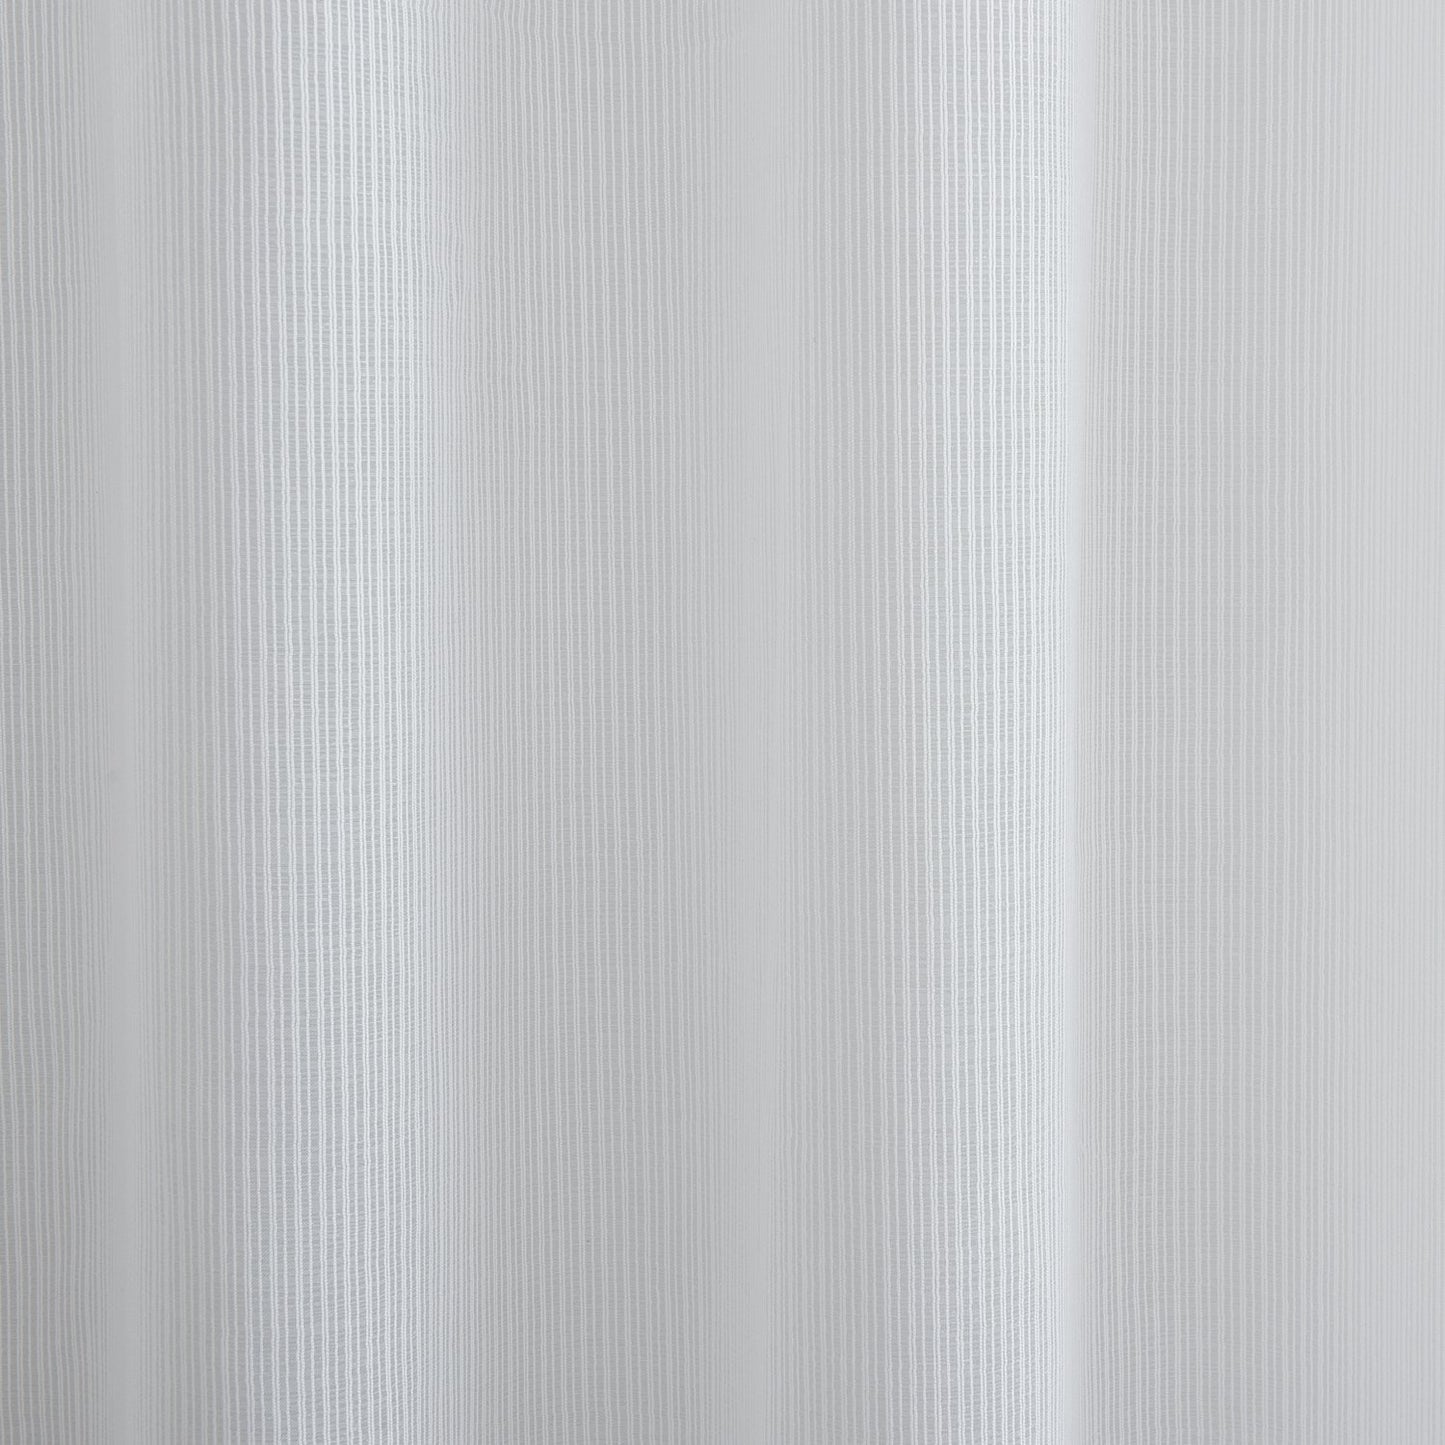 Gyrohomestore Basics Solid Grommet Top Decrative Sheer Curtains